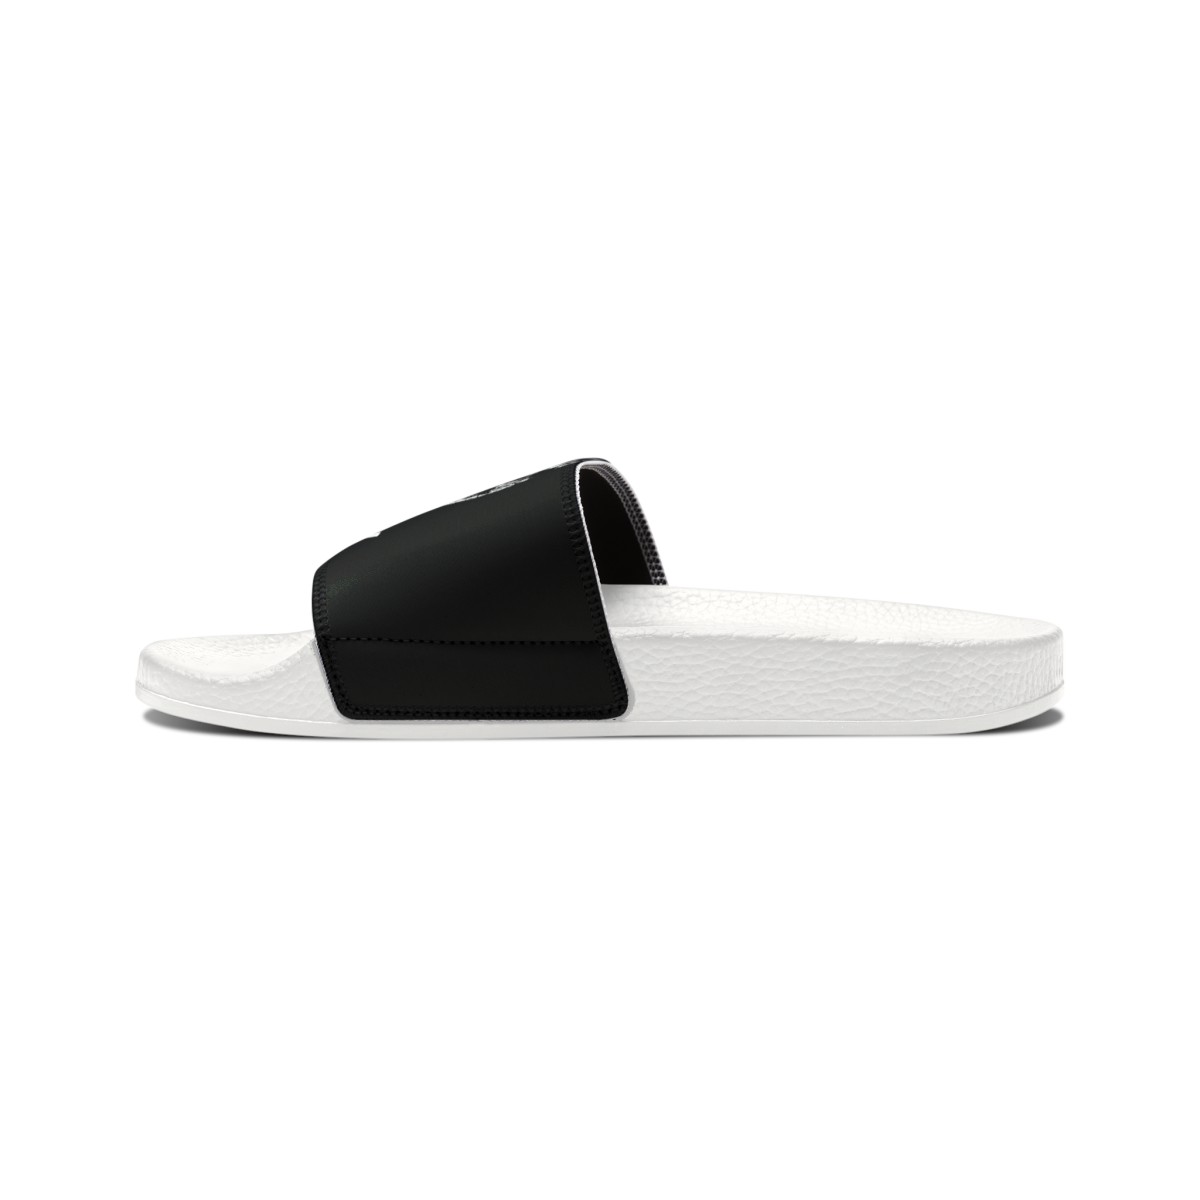 Men's Slide Sandals product thumbnail image